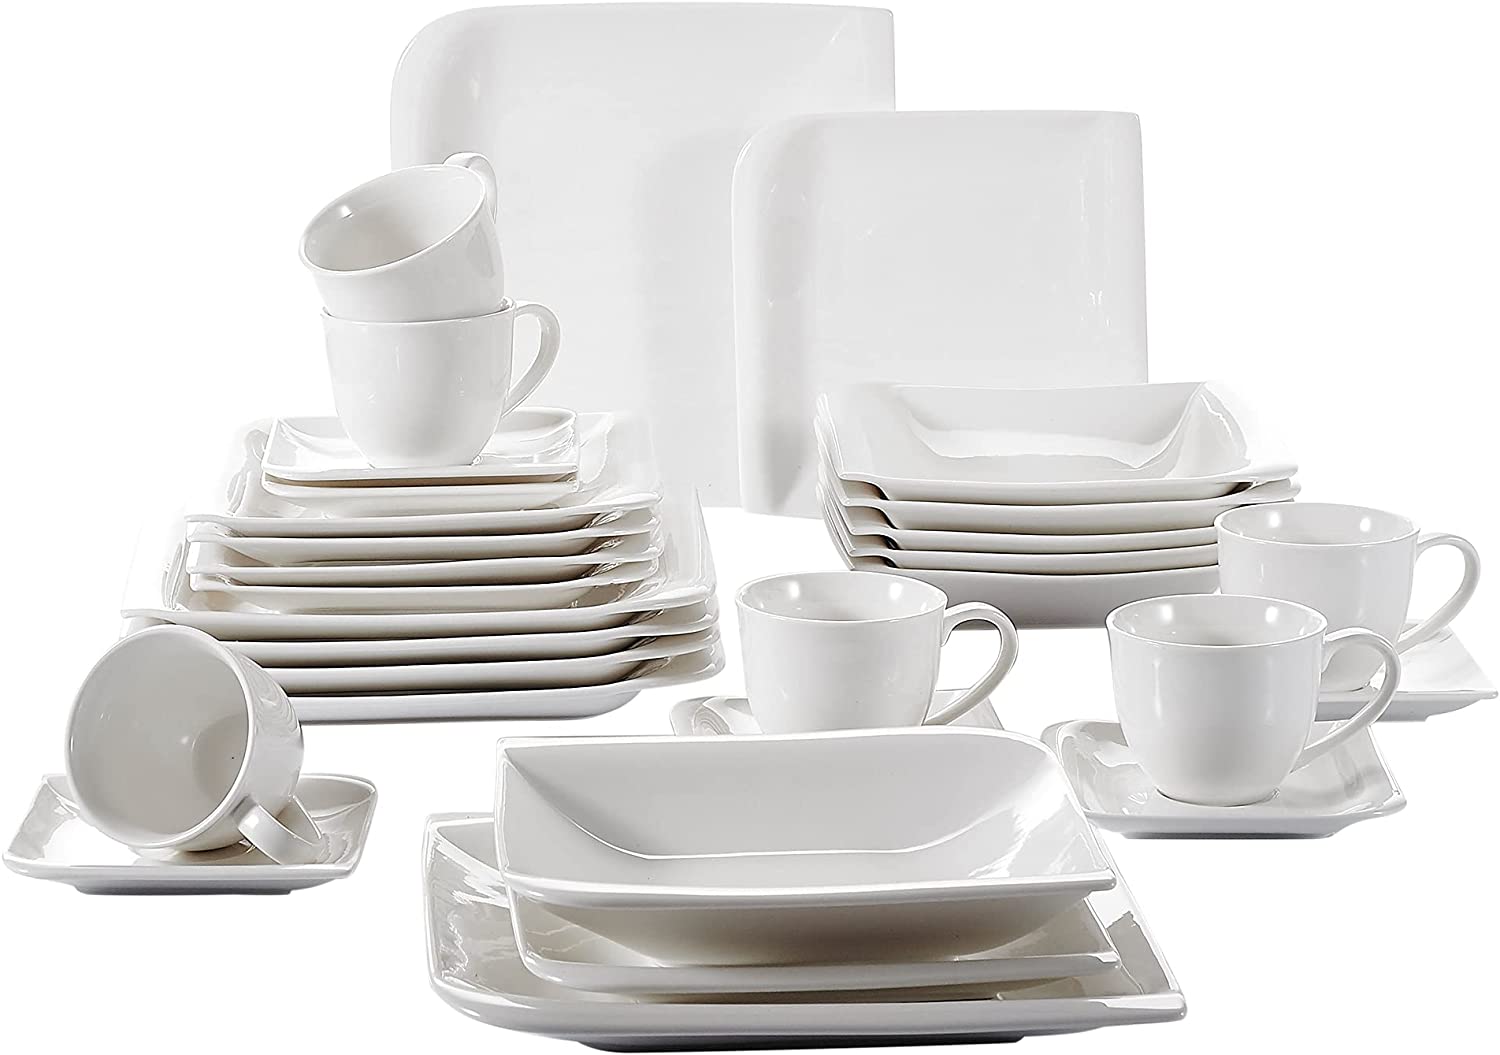 Vancasso Yolanda 30-Piece Porcelain Crockery Set, Dinner Service for 6 People, White